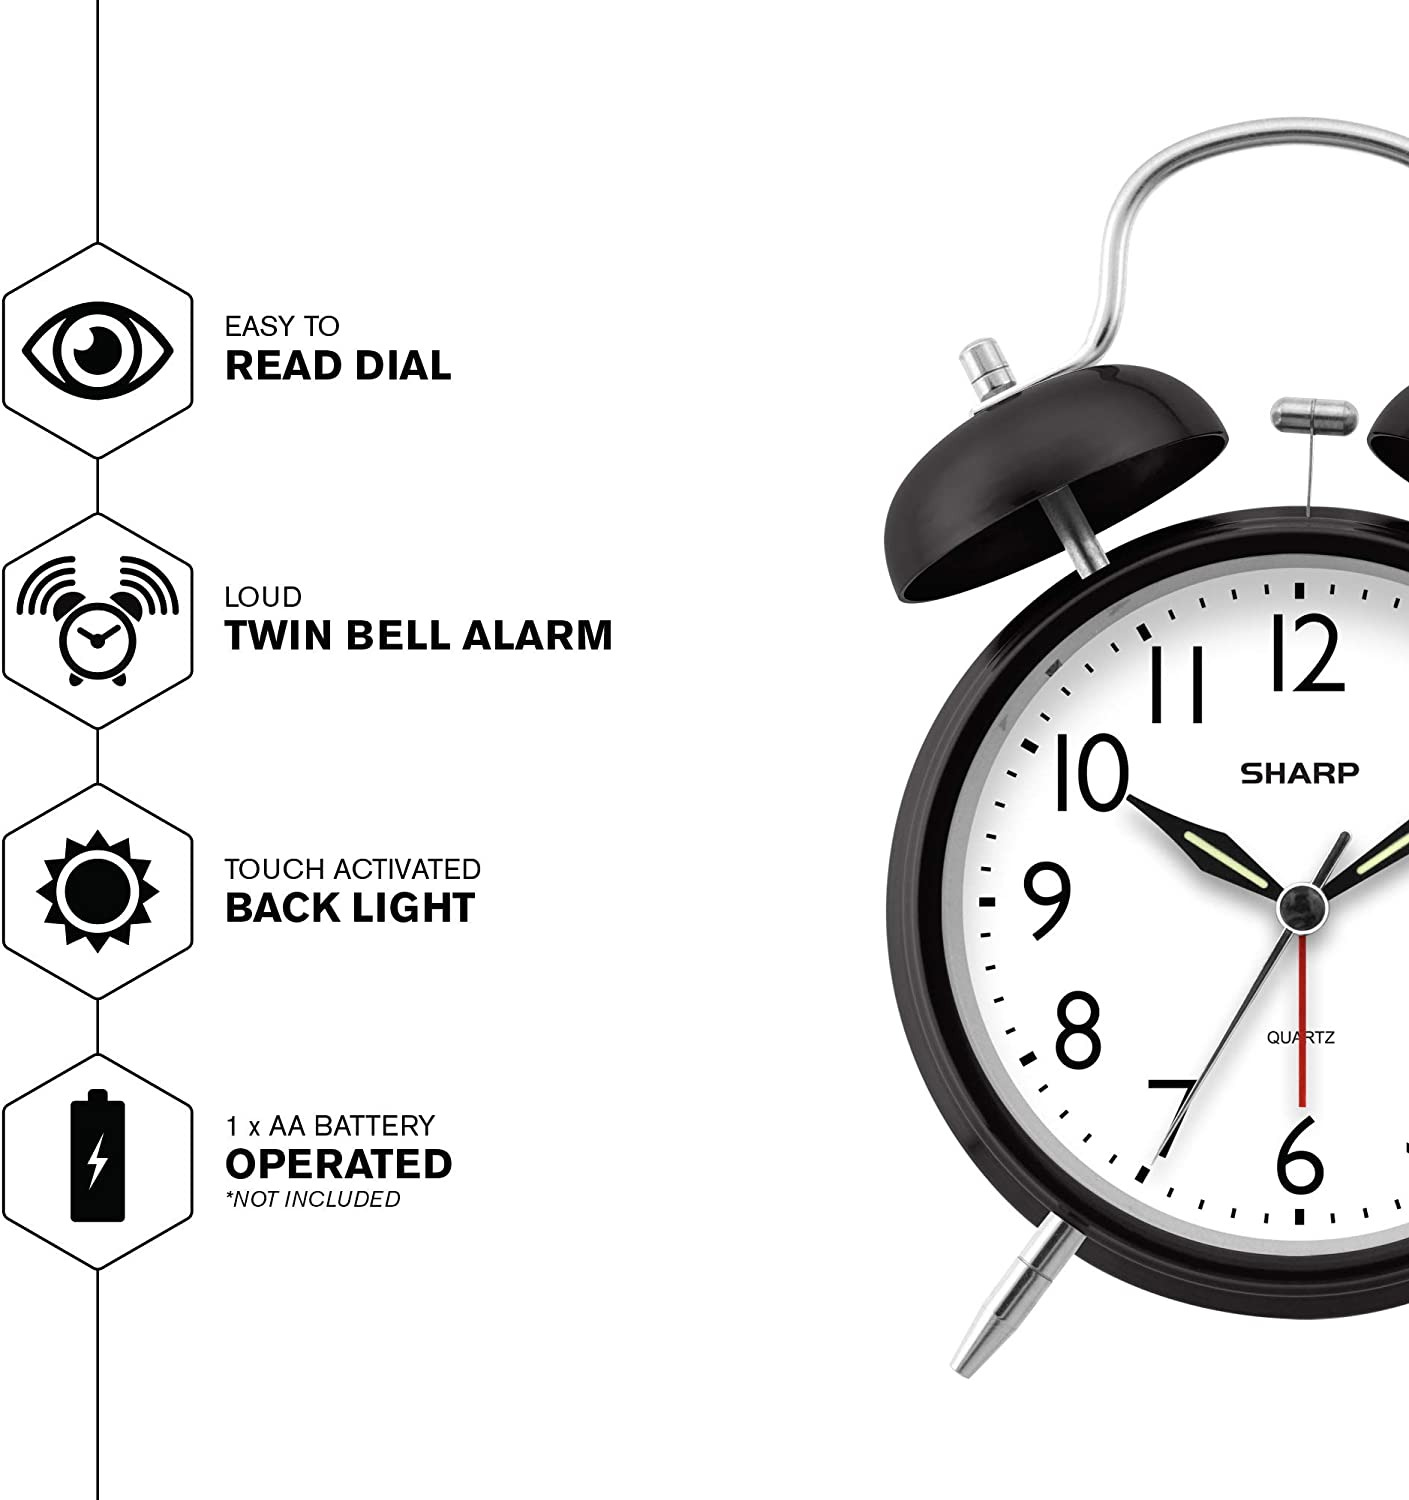 Analog Twin Bell Alarm Clock Quartz Black Backlight LOUD Wake Old Fashioned